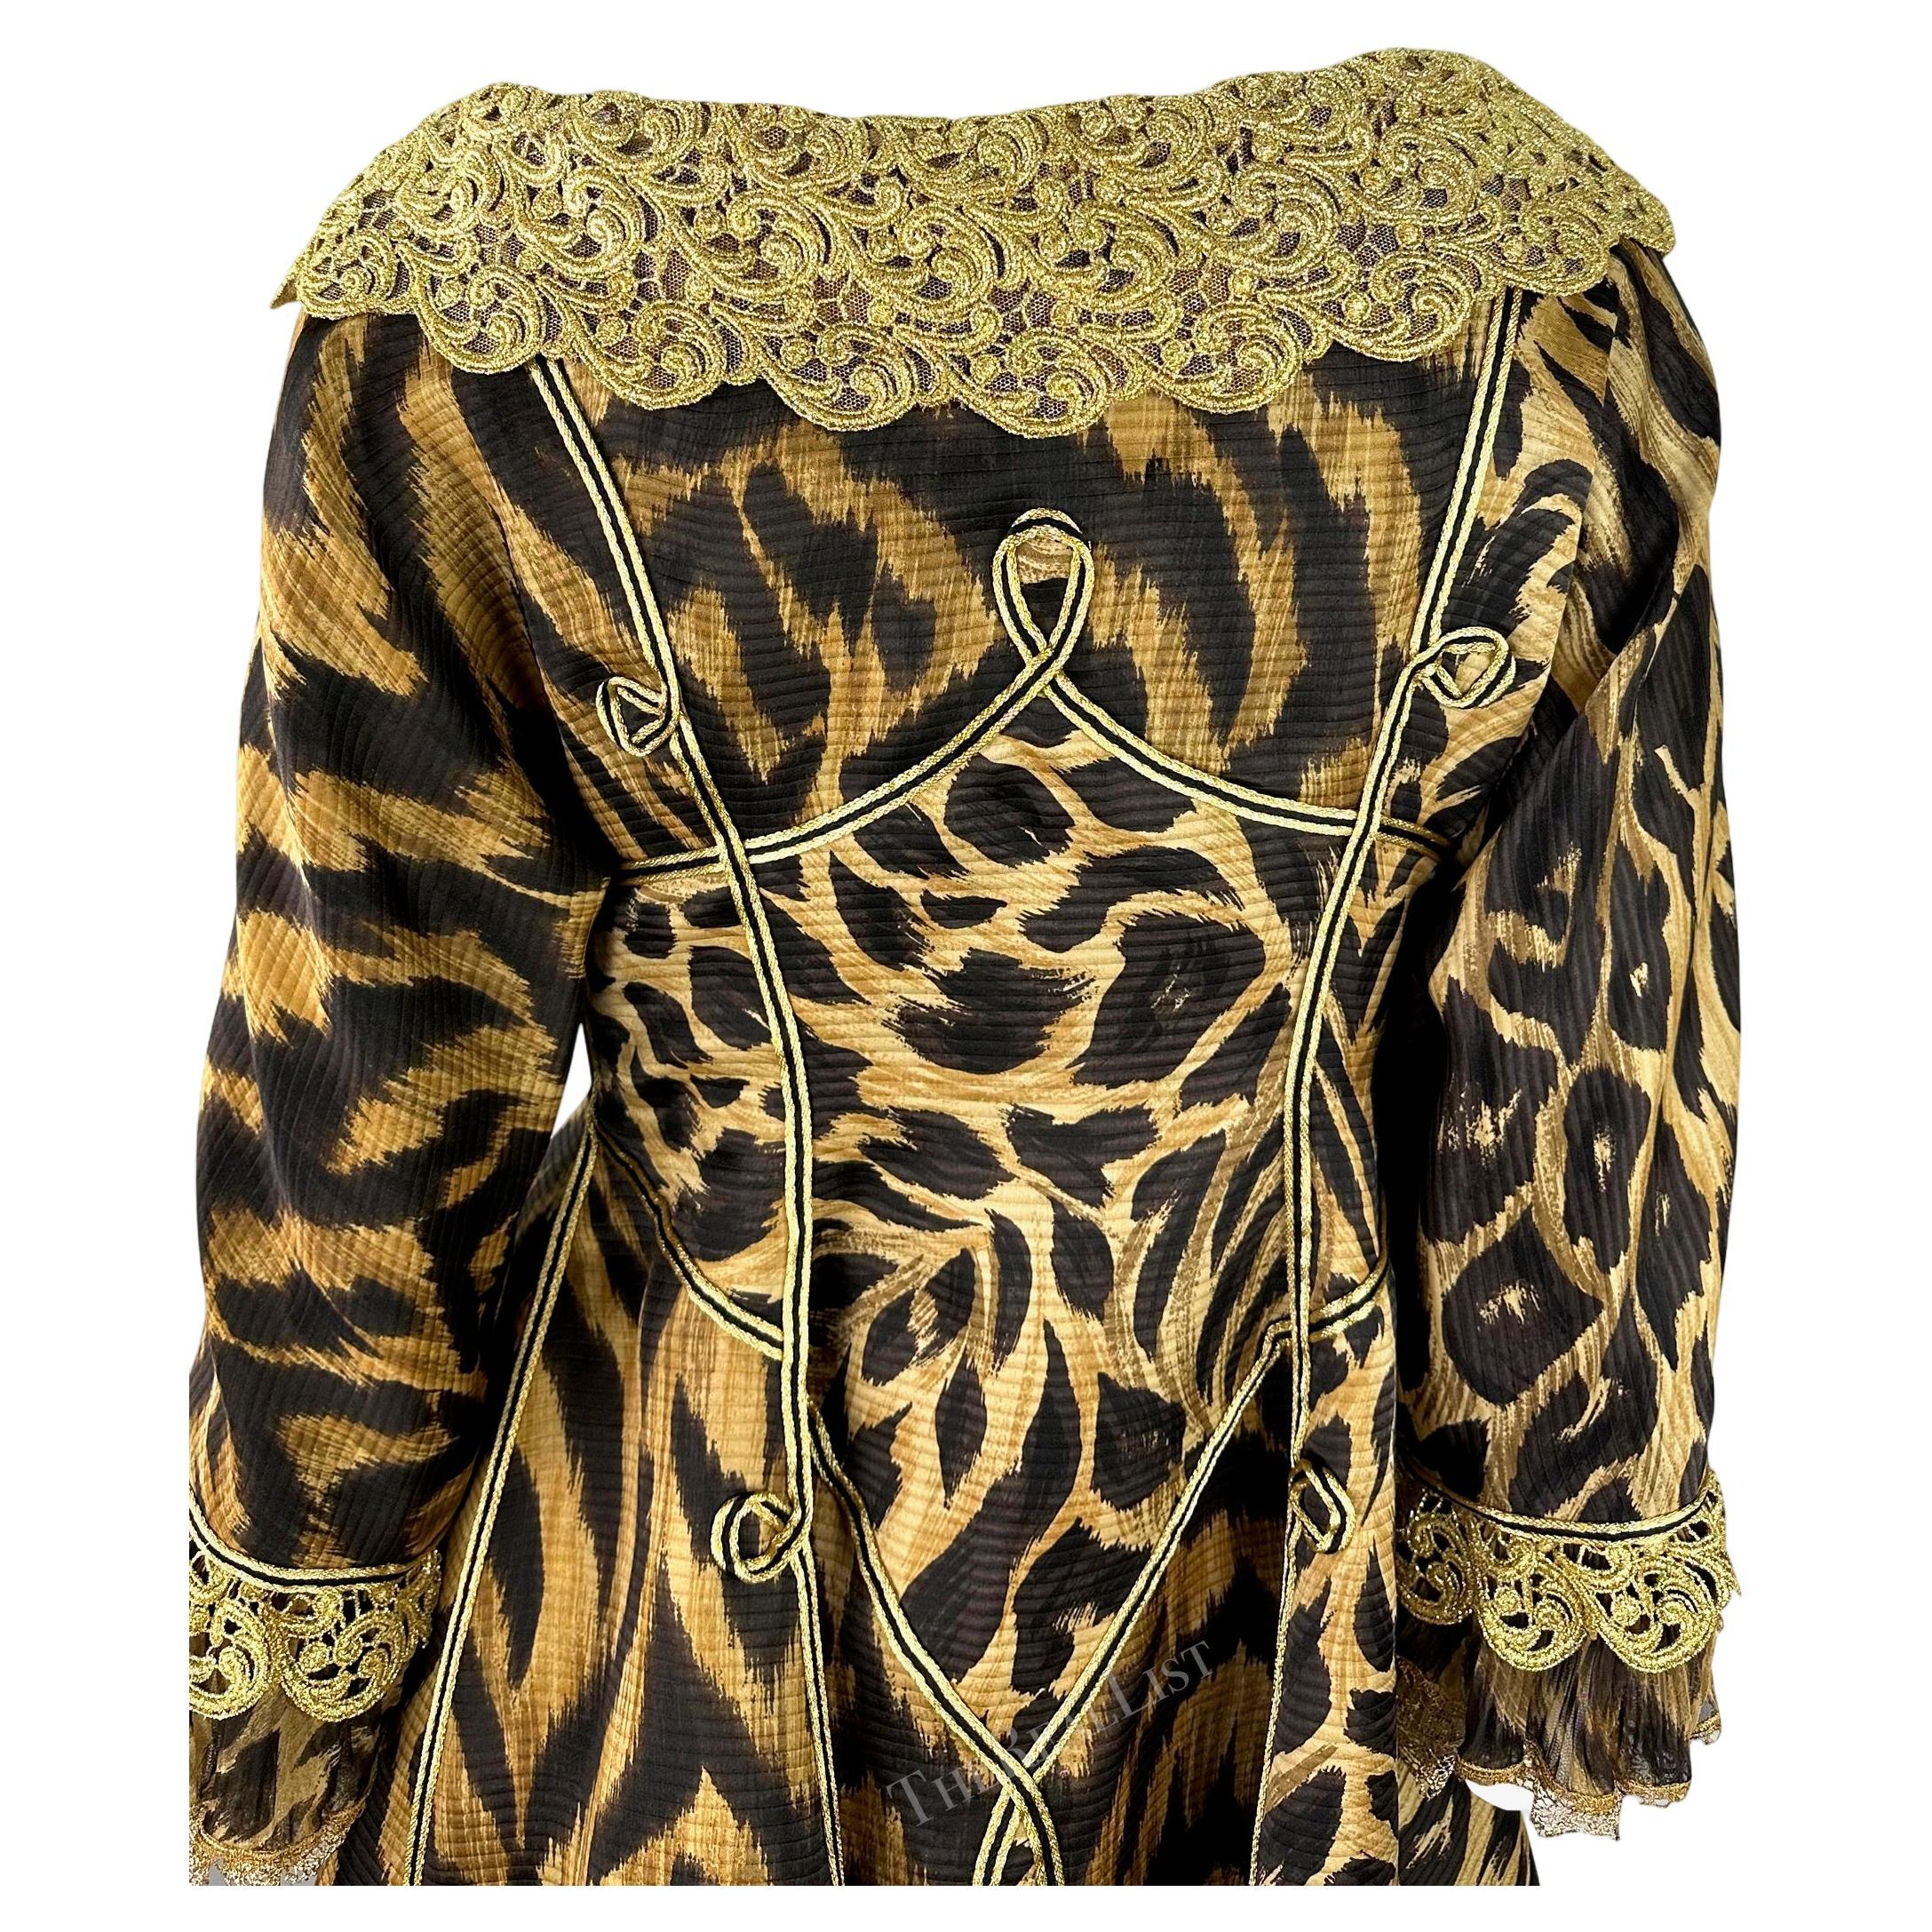 S/S 1992 Atelier Versace Haute Couture Runway Leopard Silk Gold Lace Coat Dress For Sale 8